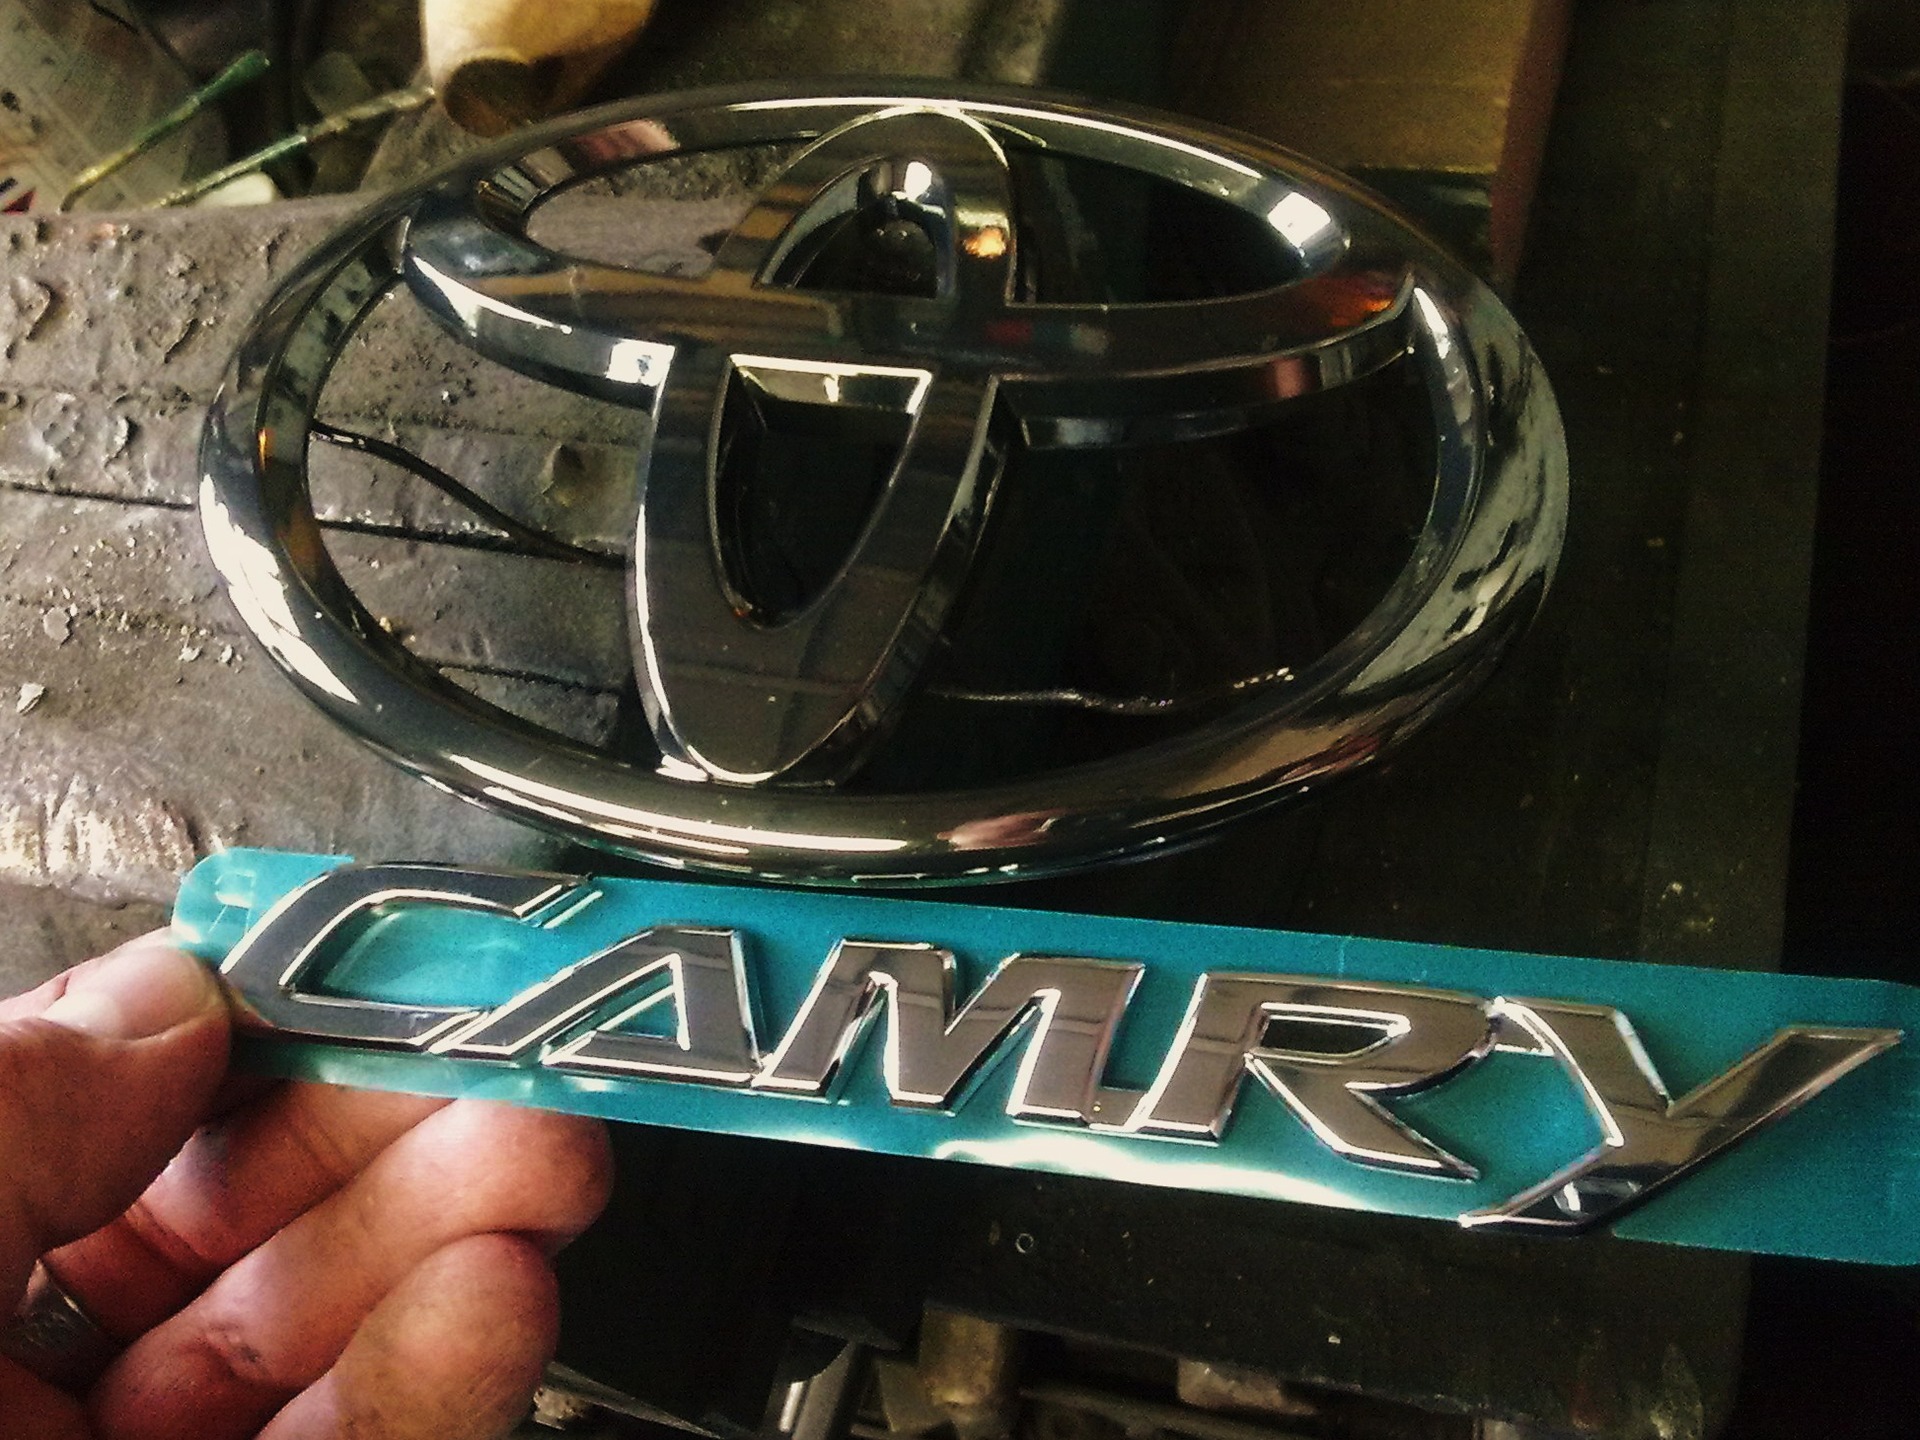  - Toyota Camry 24 2008 